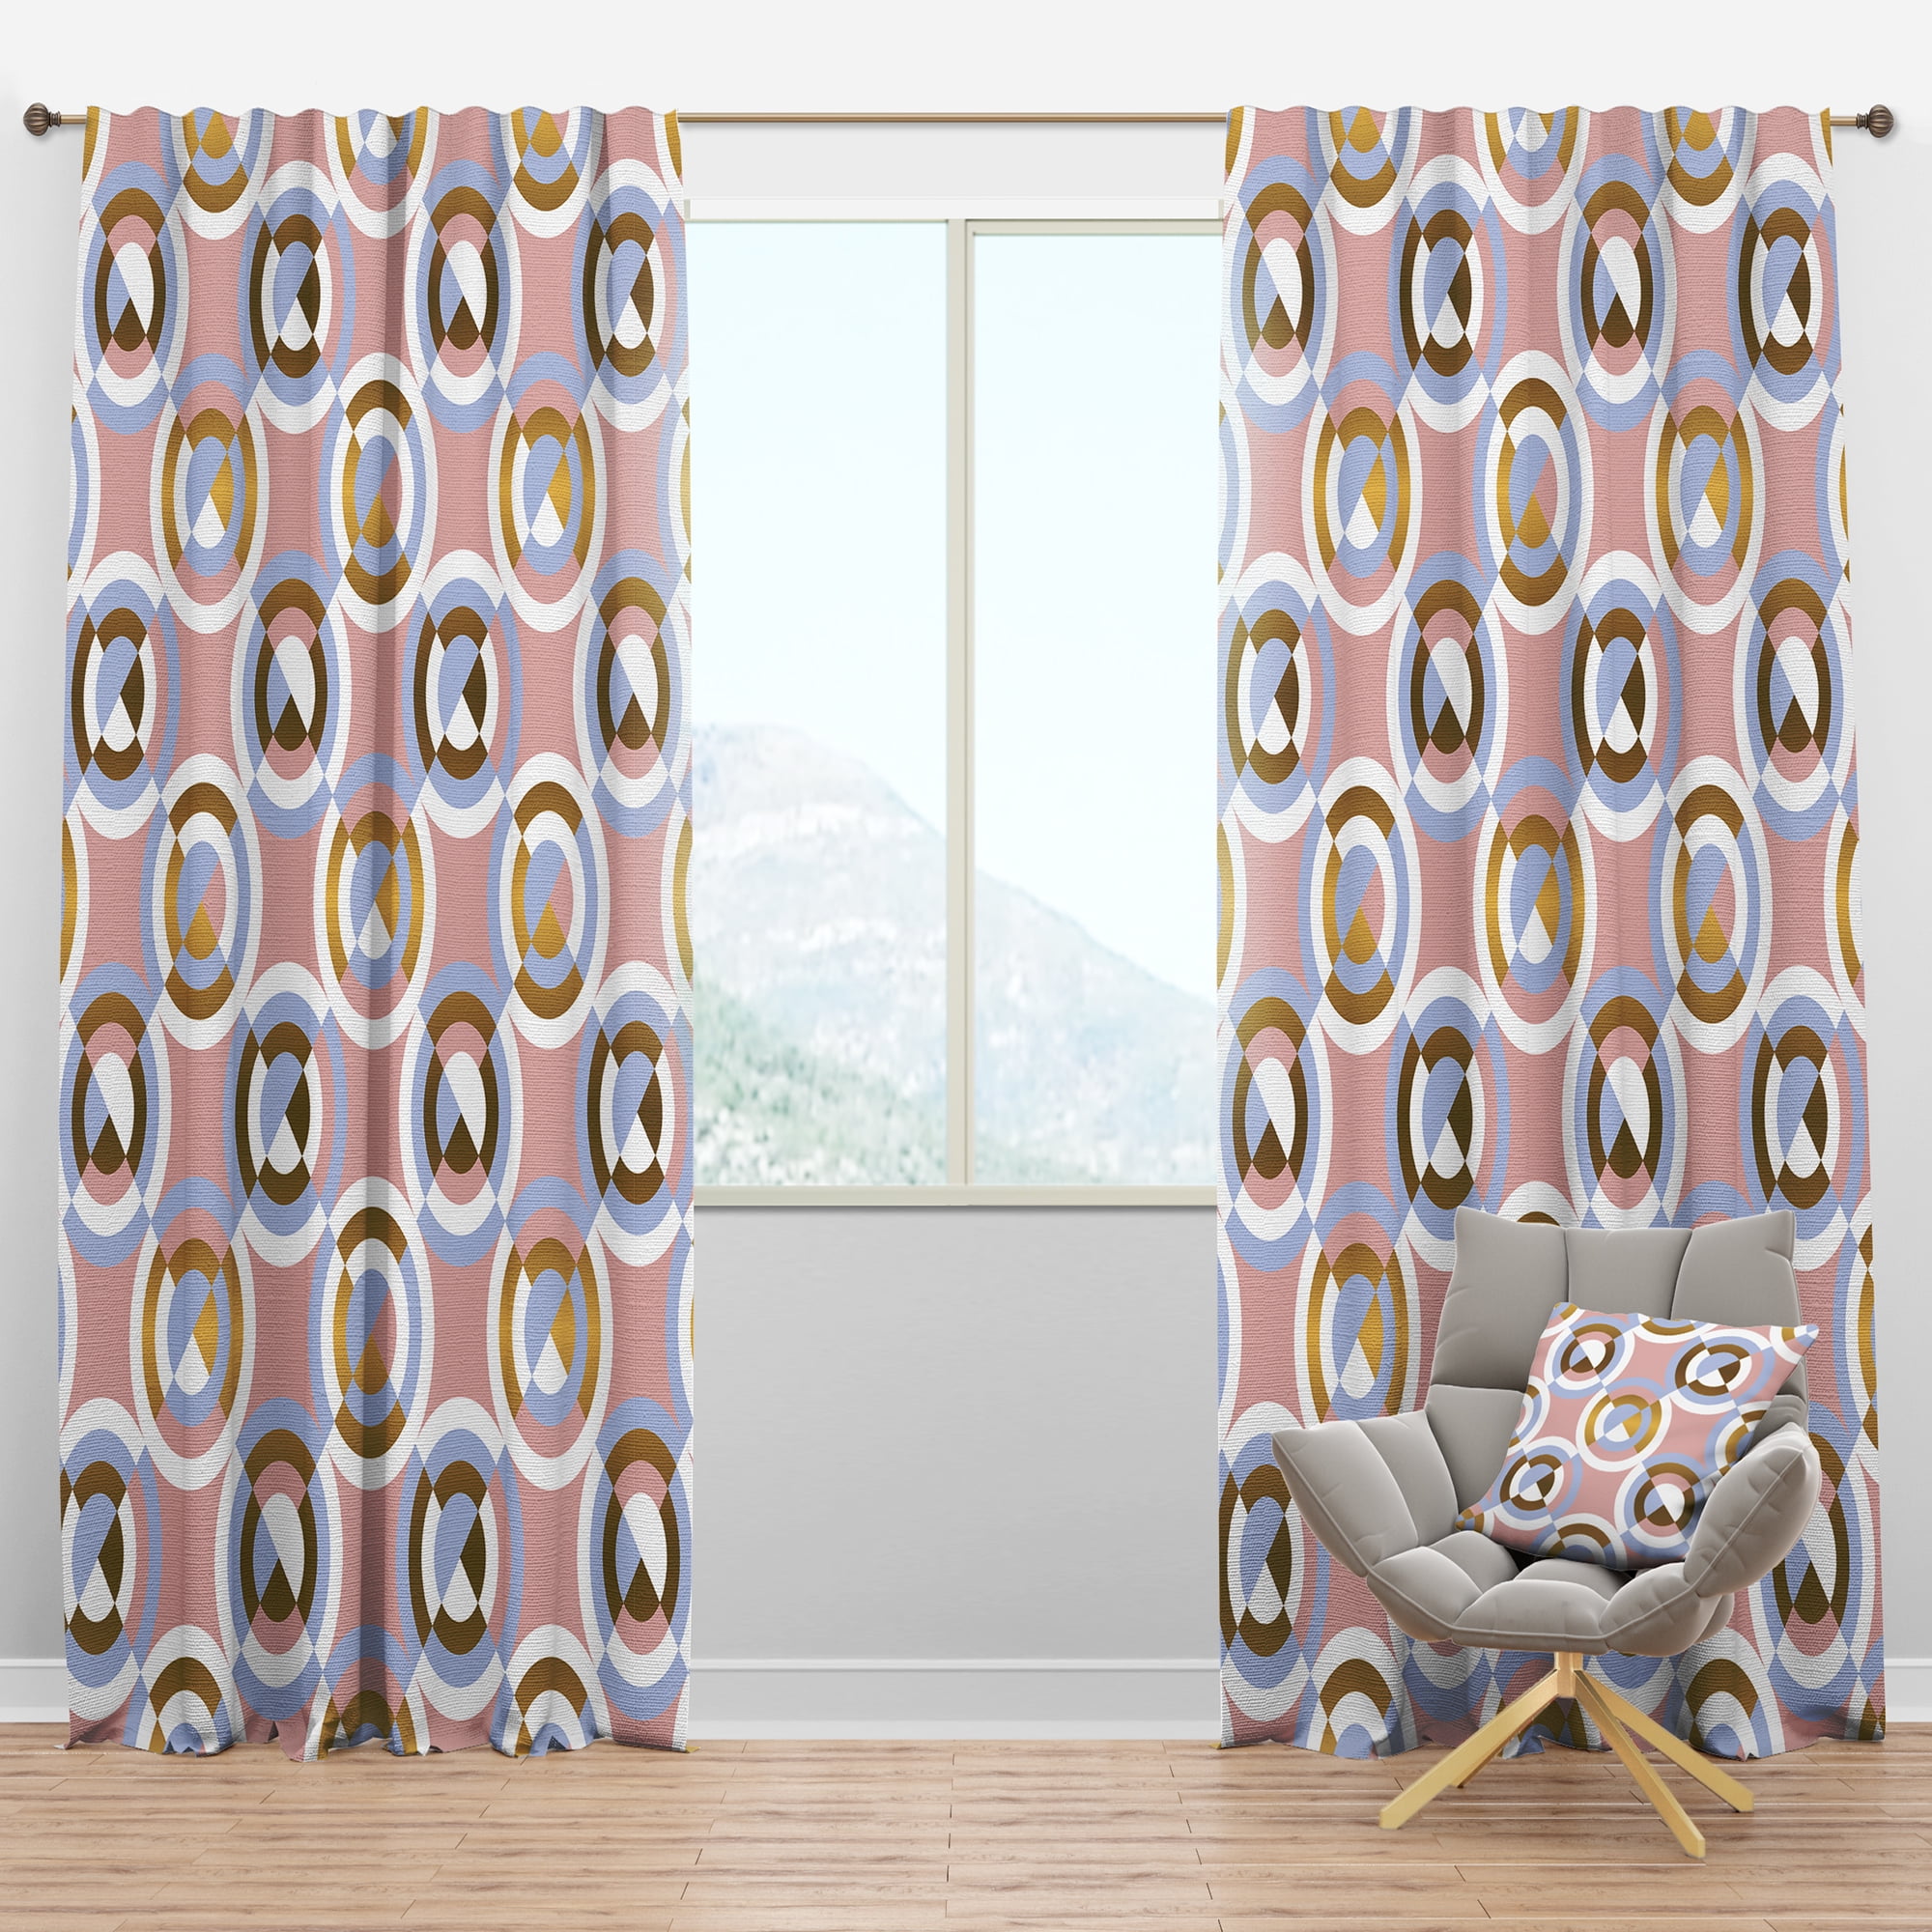  Alishomtll 4 Pcs Abstract Mid Century Shower Curtain